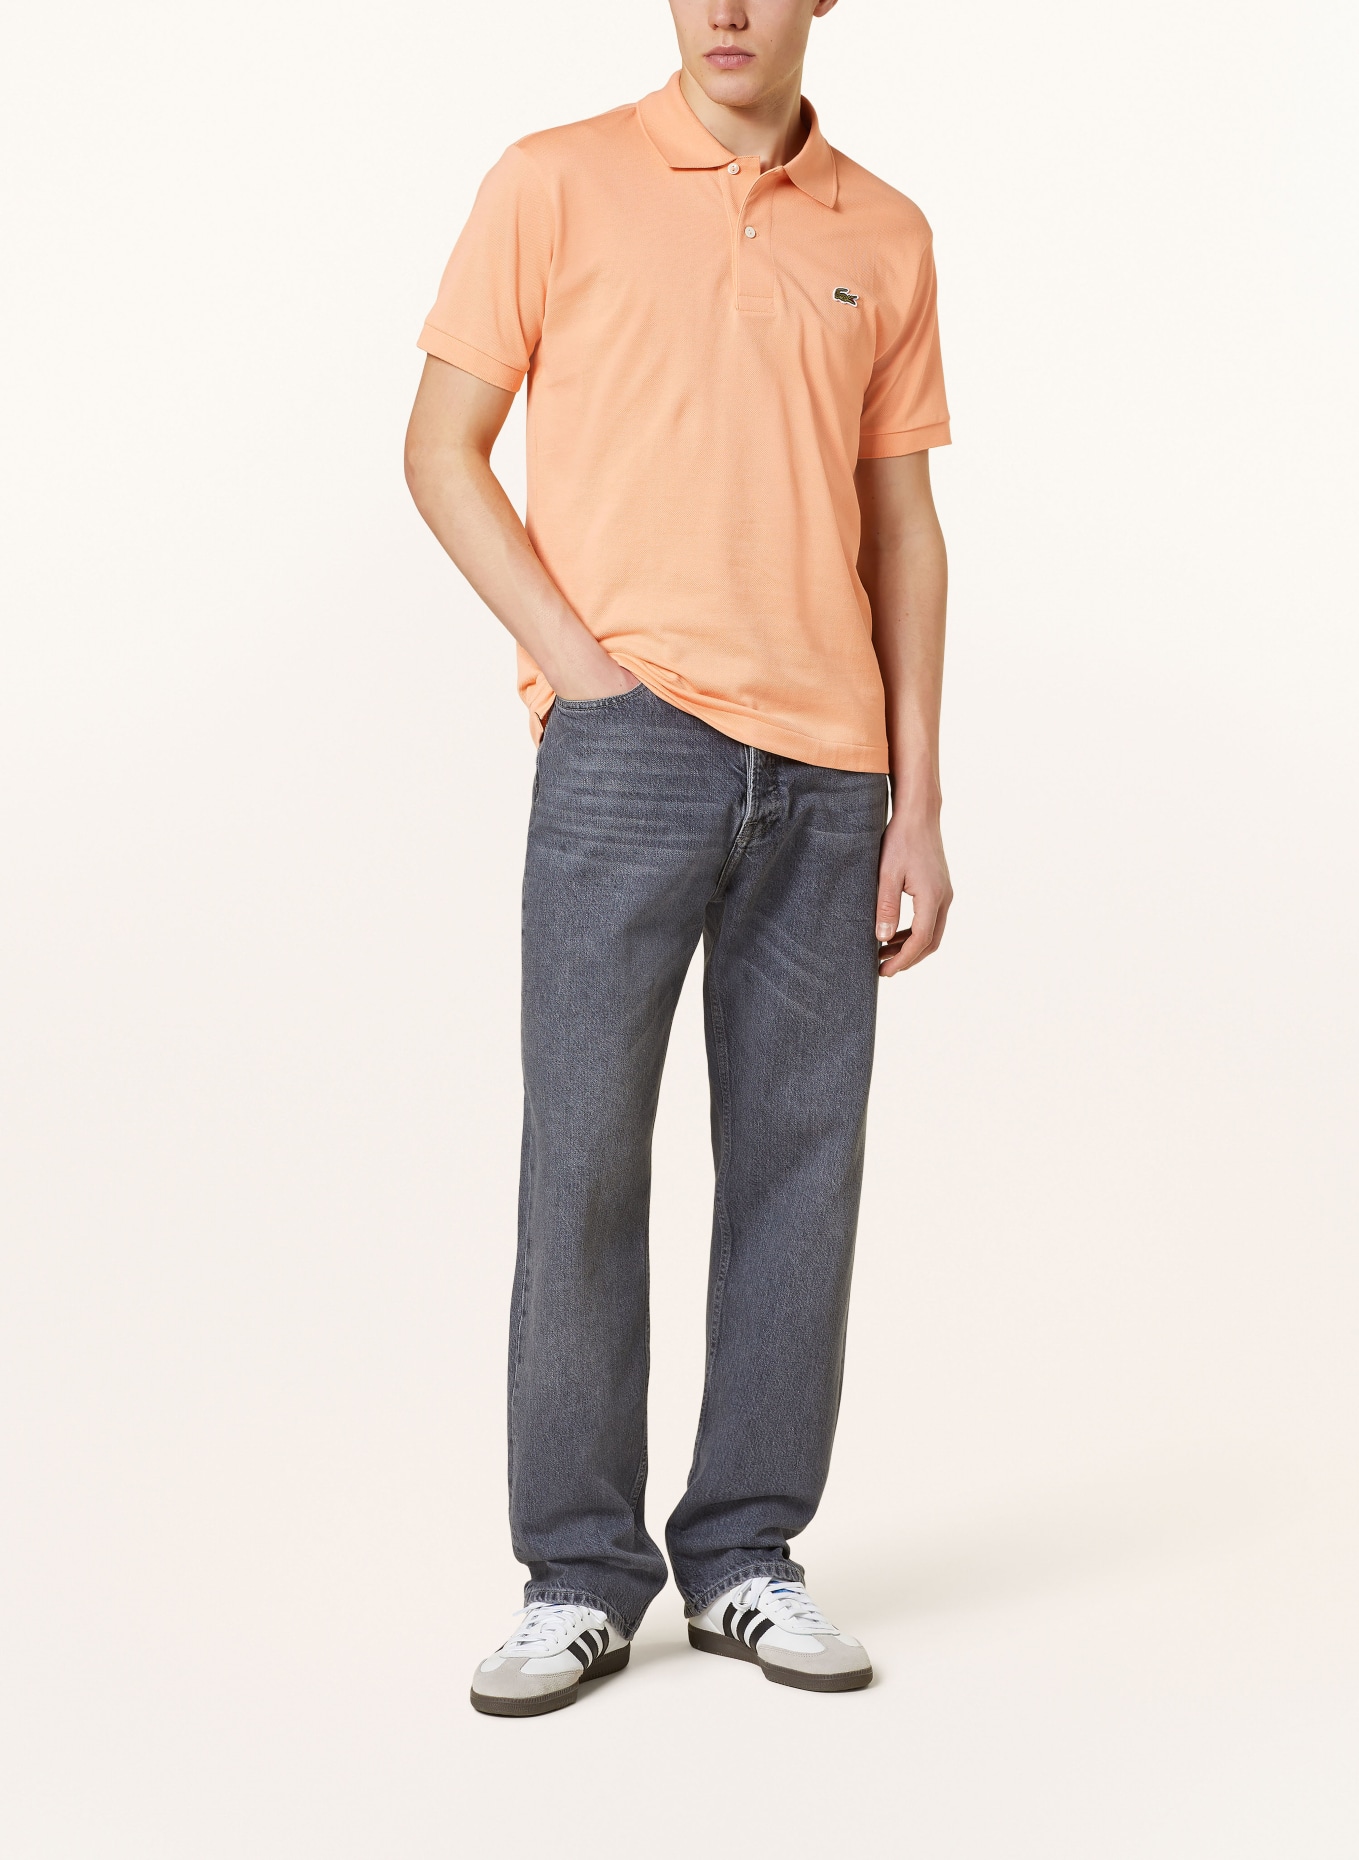 LACOSTE Piqué-Poloshirt Classic Fit, Farbe: HELLORANGE (Bild 2)